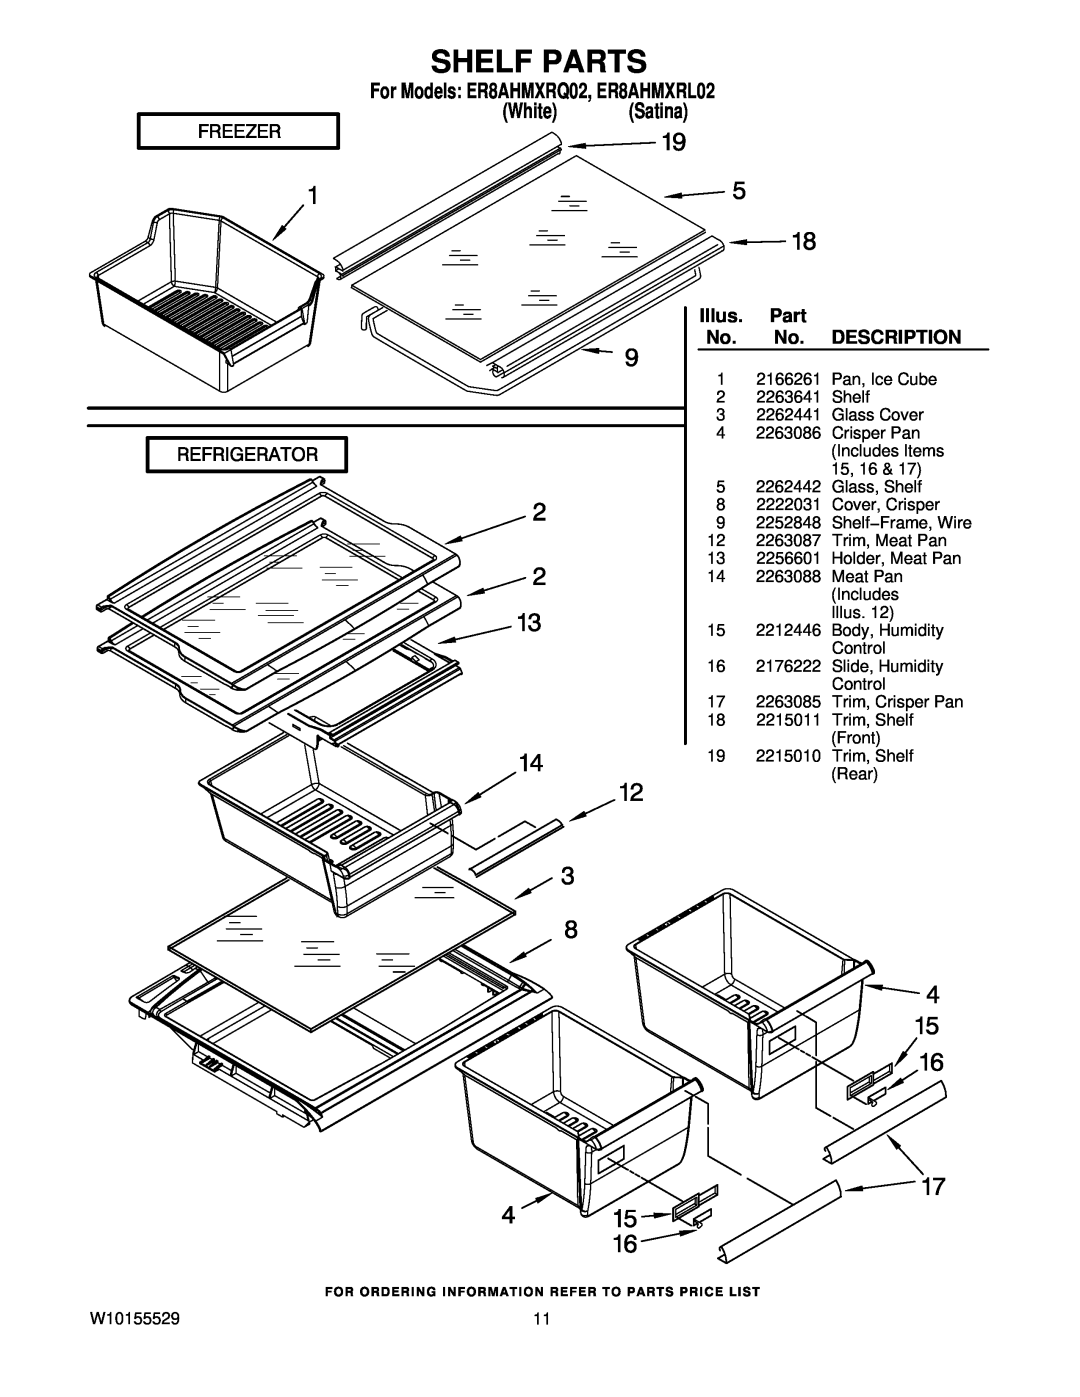 Whirlpool manual Shelf Parts, Illus, Description, For Models ER8AHMXRQ02, ER8AHMXRL02 White Satina 